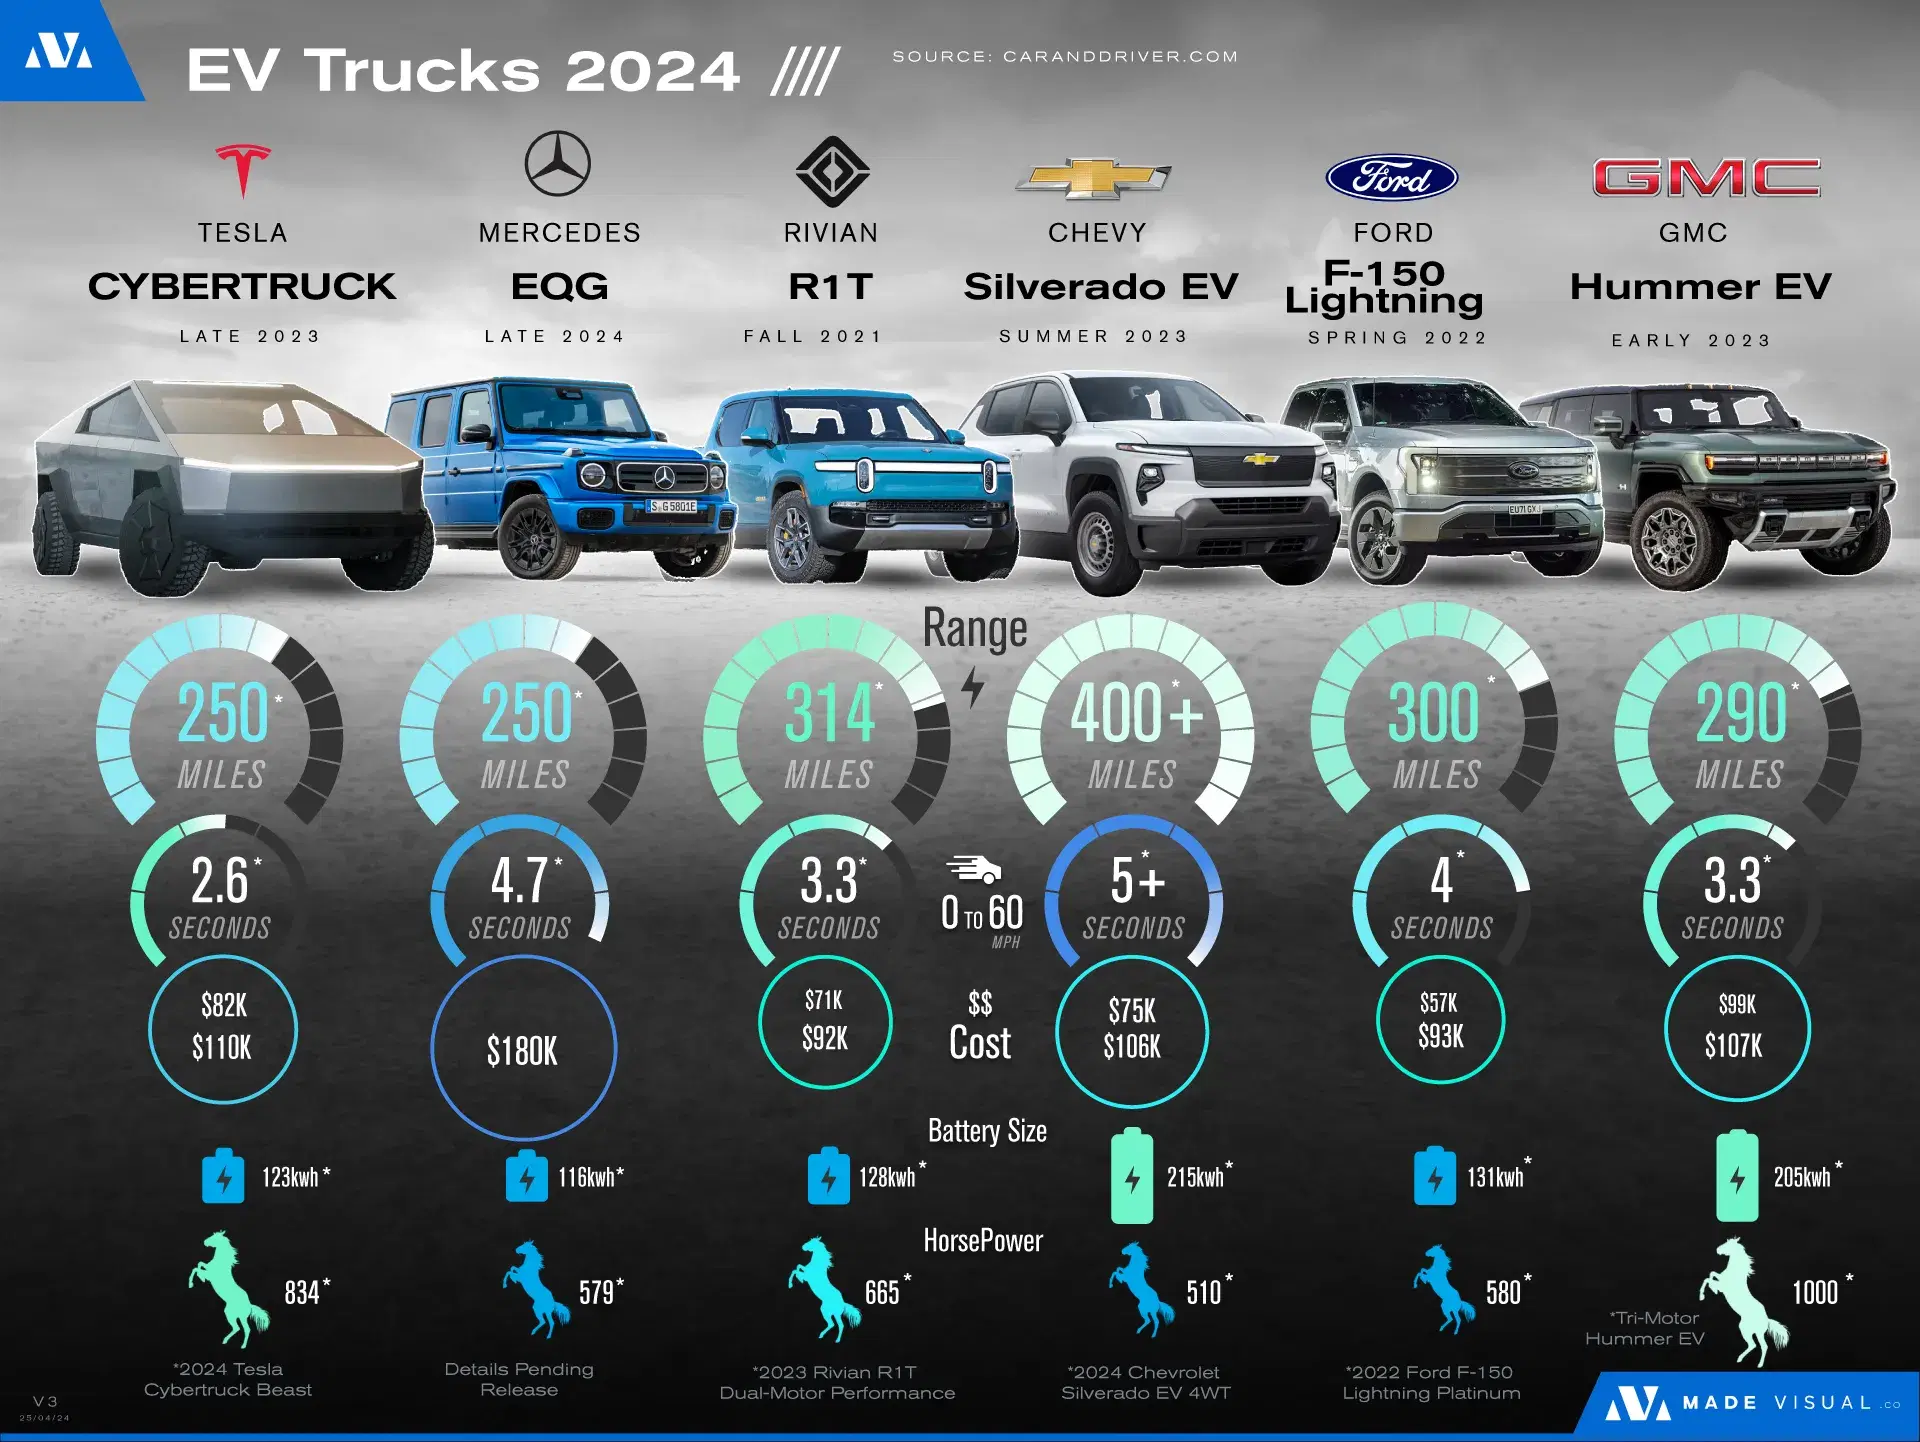 The EV Truck Landscape in 2024